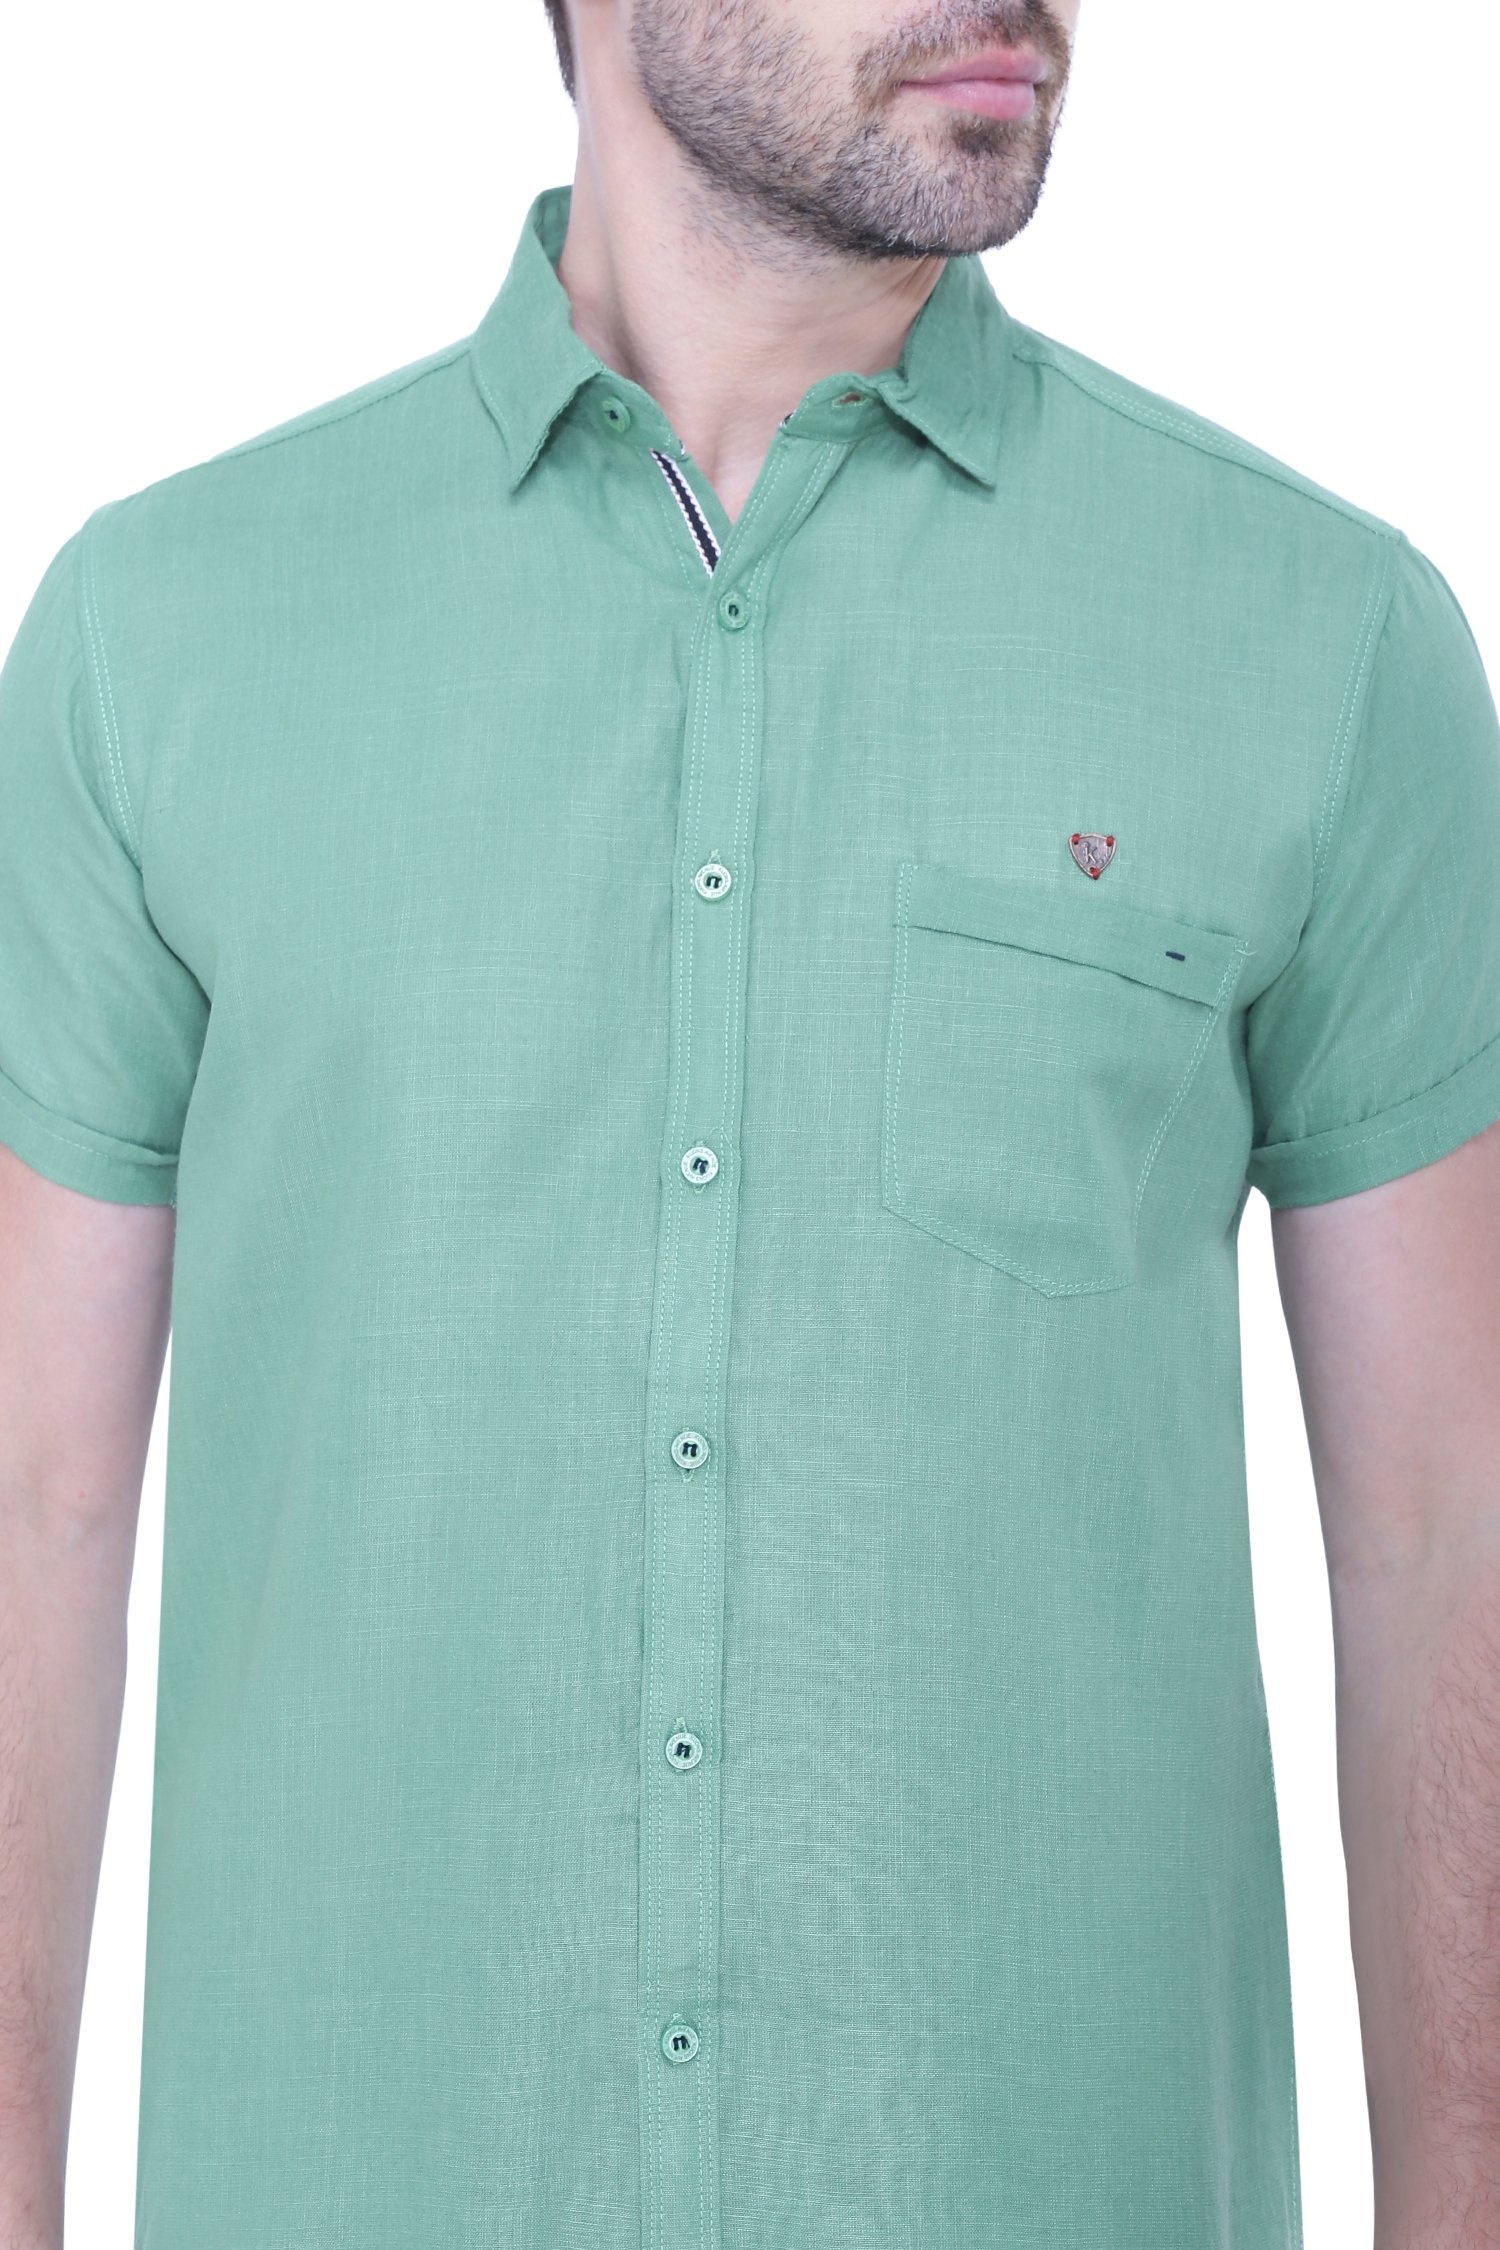 Kuons Avenue | Kuons Avenue Men's Linen Blend Half Sleeves Casual Shirt-KACLHS1237 3